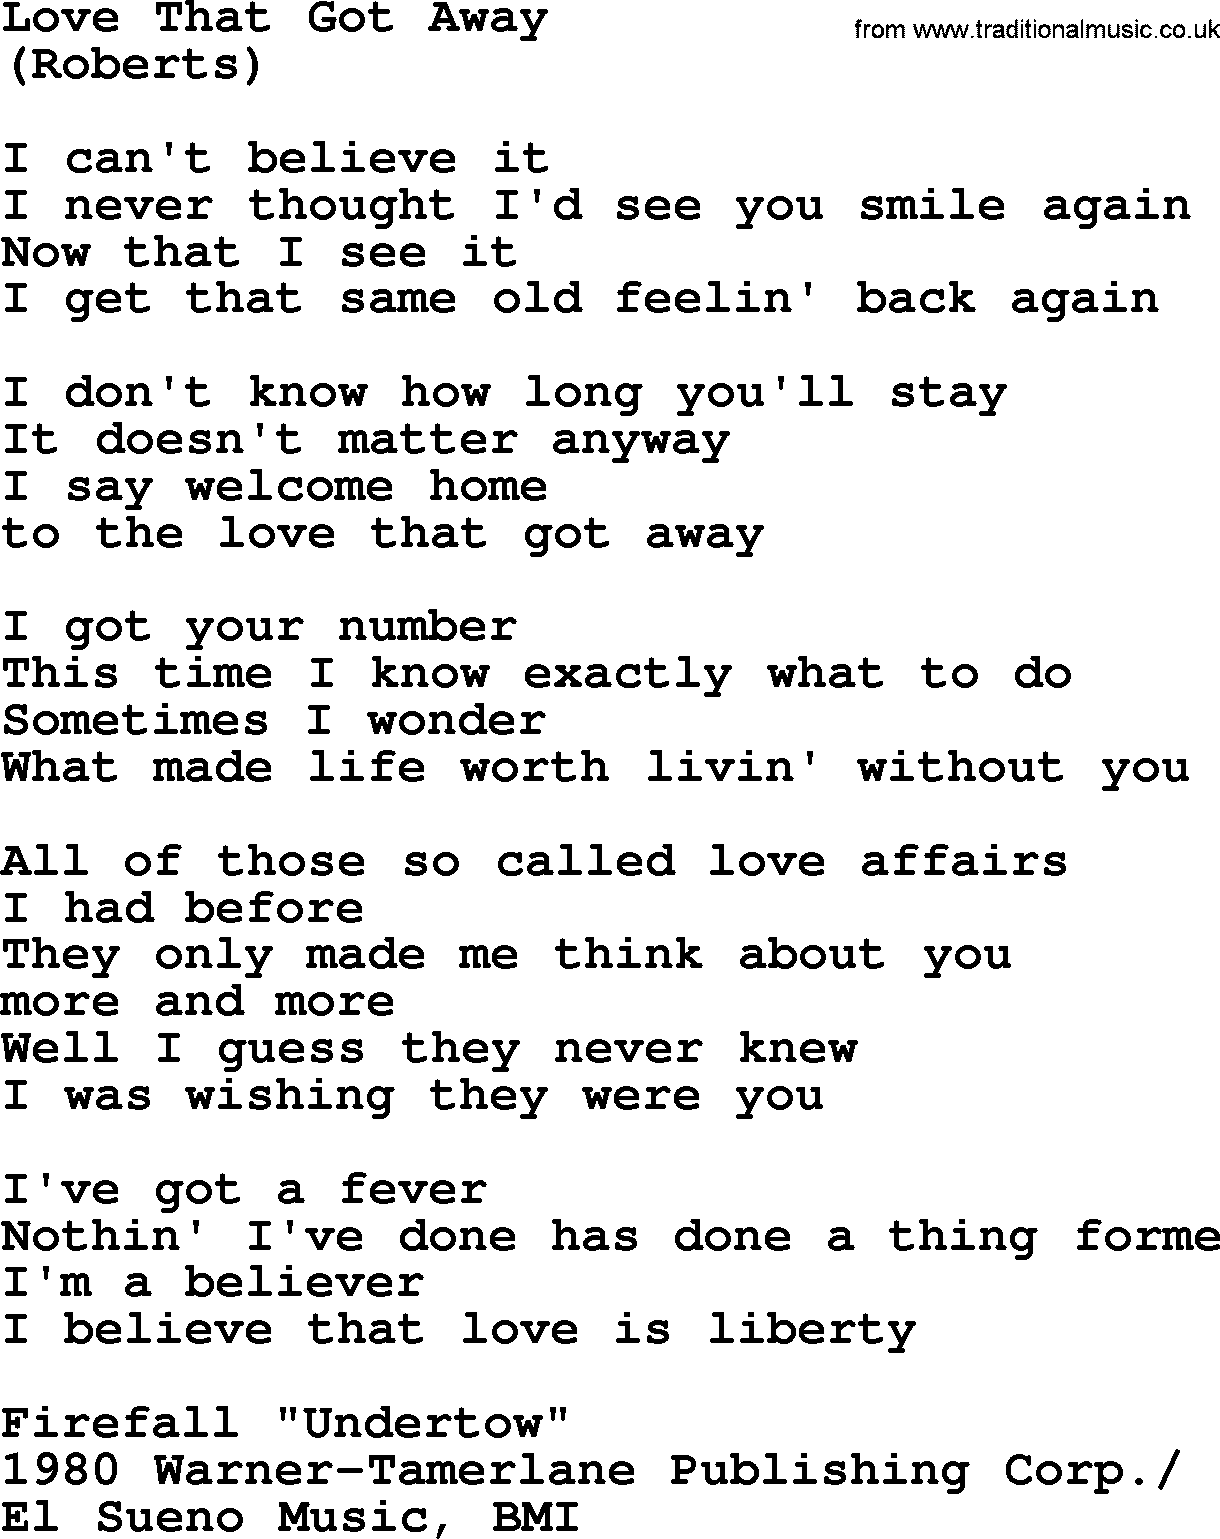 The Byrds song Love That Got Away, lyrics